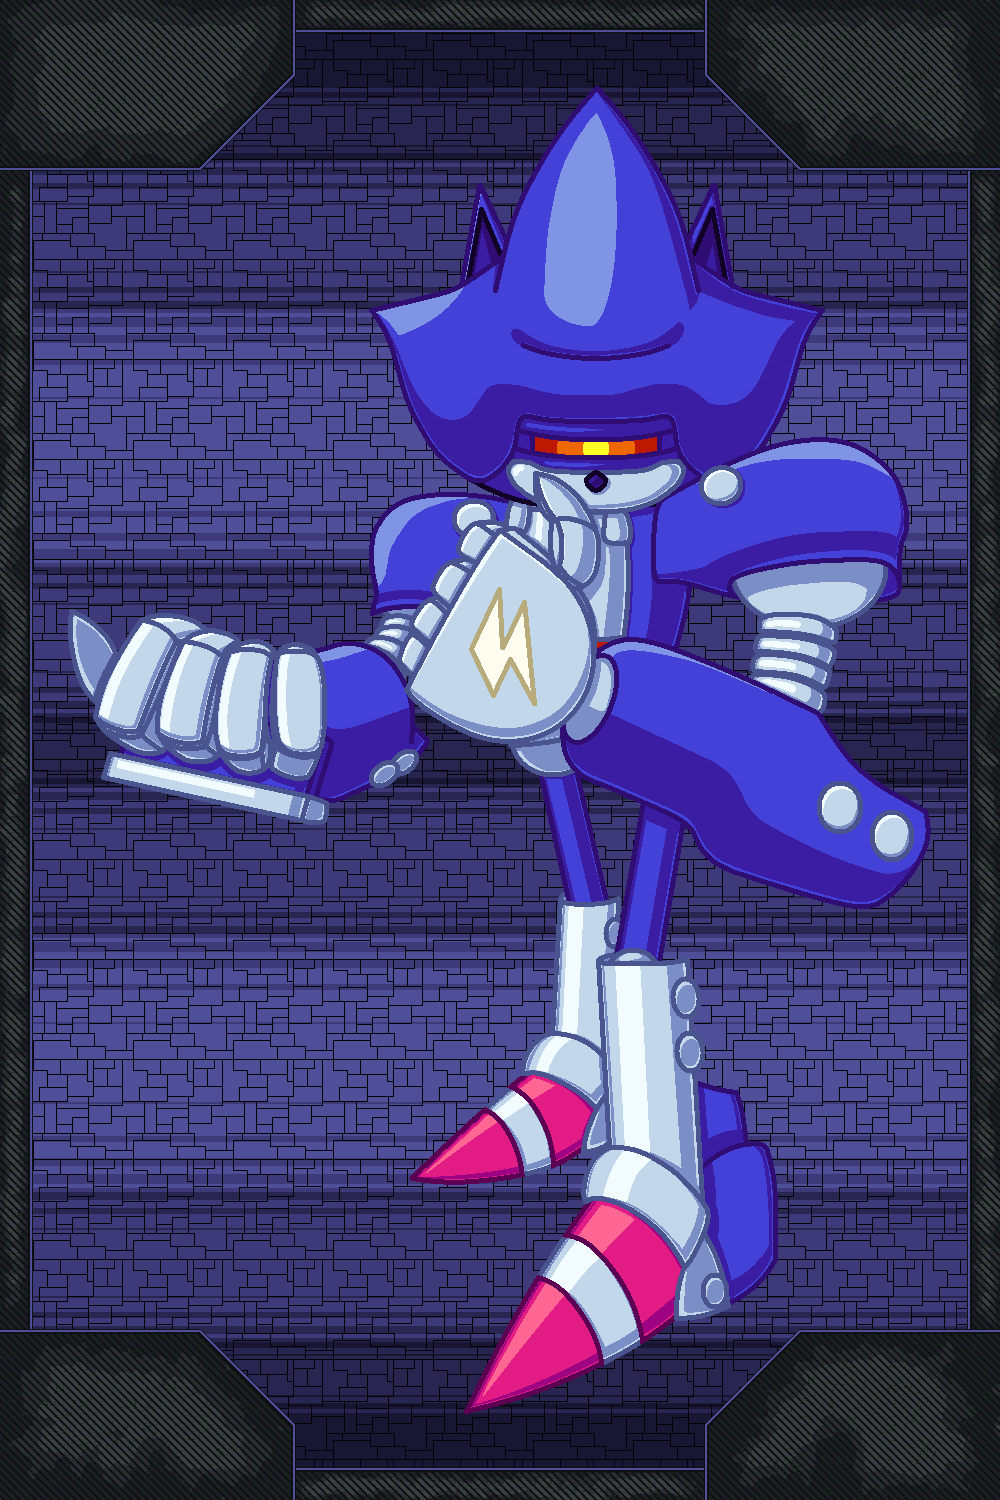 Mecha Sonic Mk.II by Katlike-Rider on DeviantArt